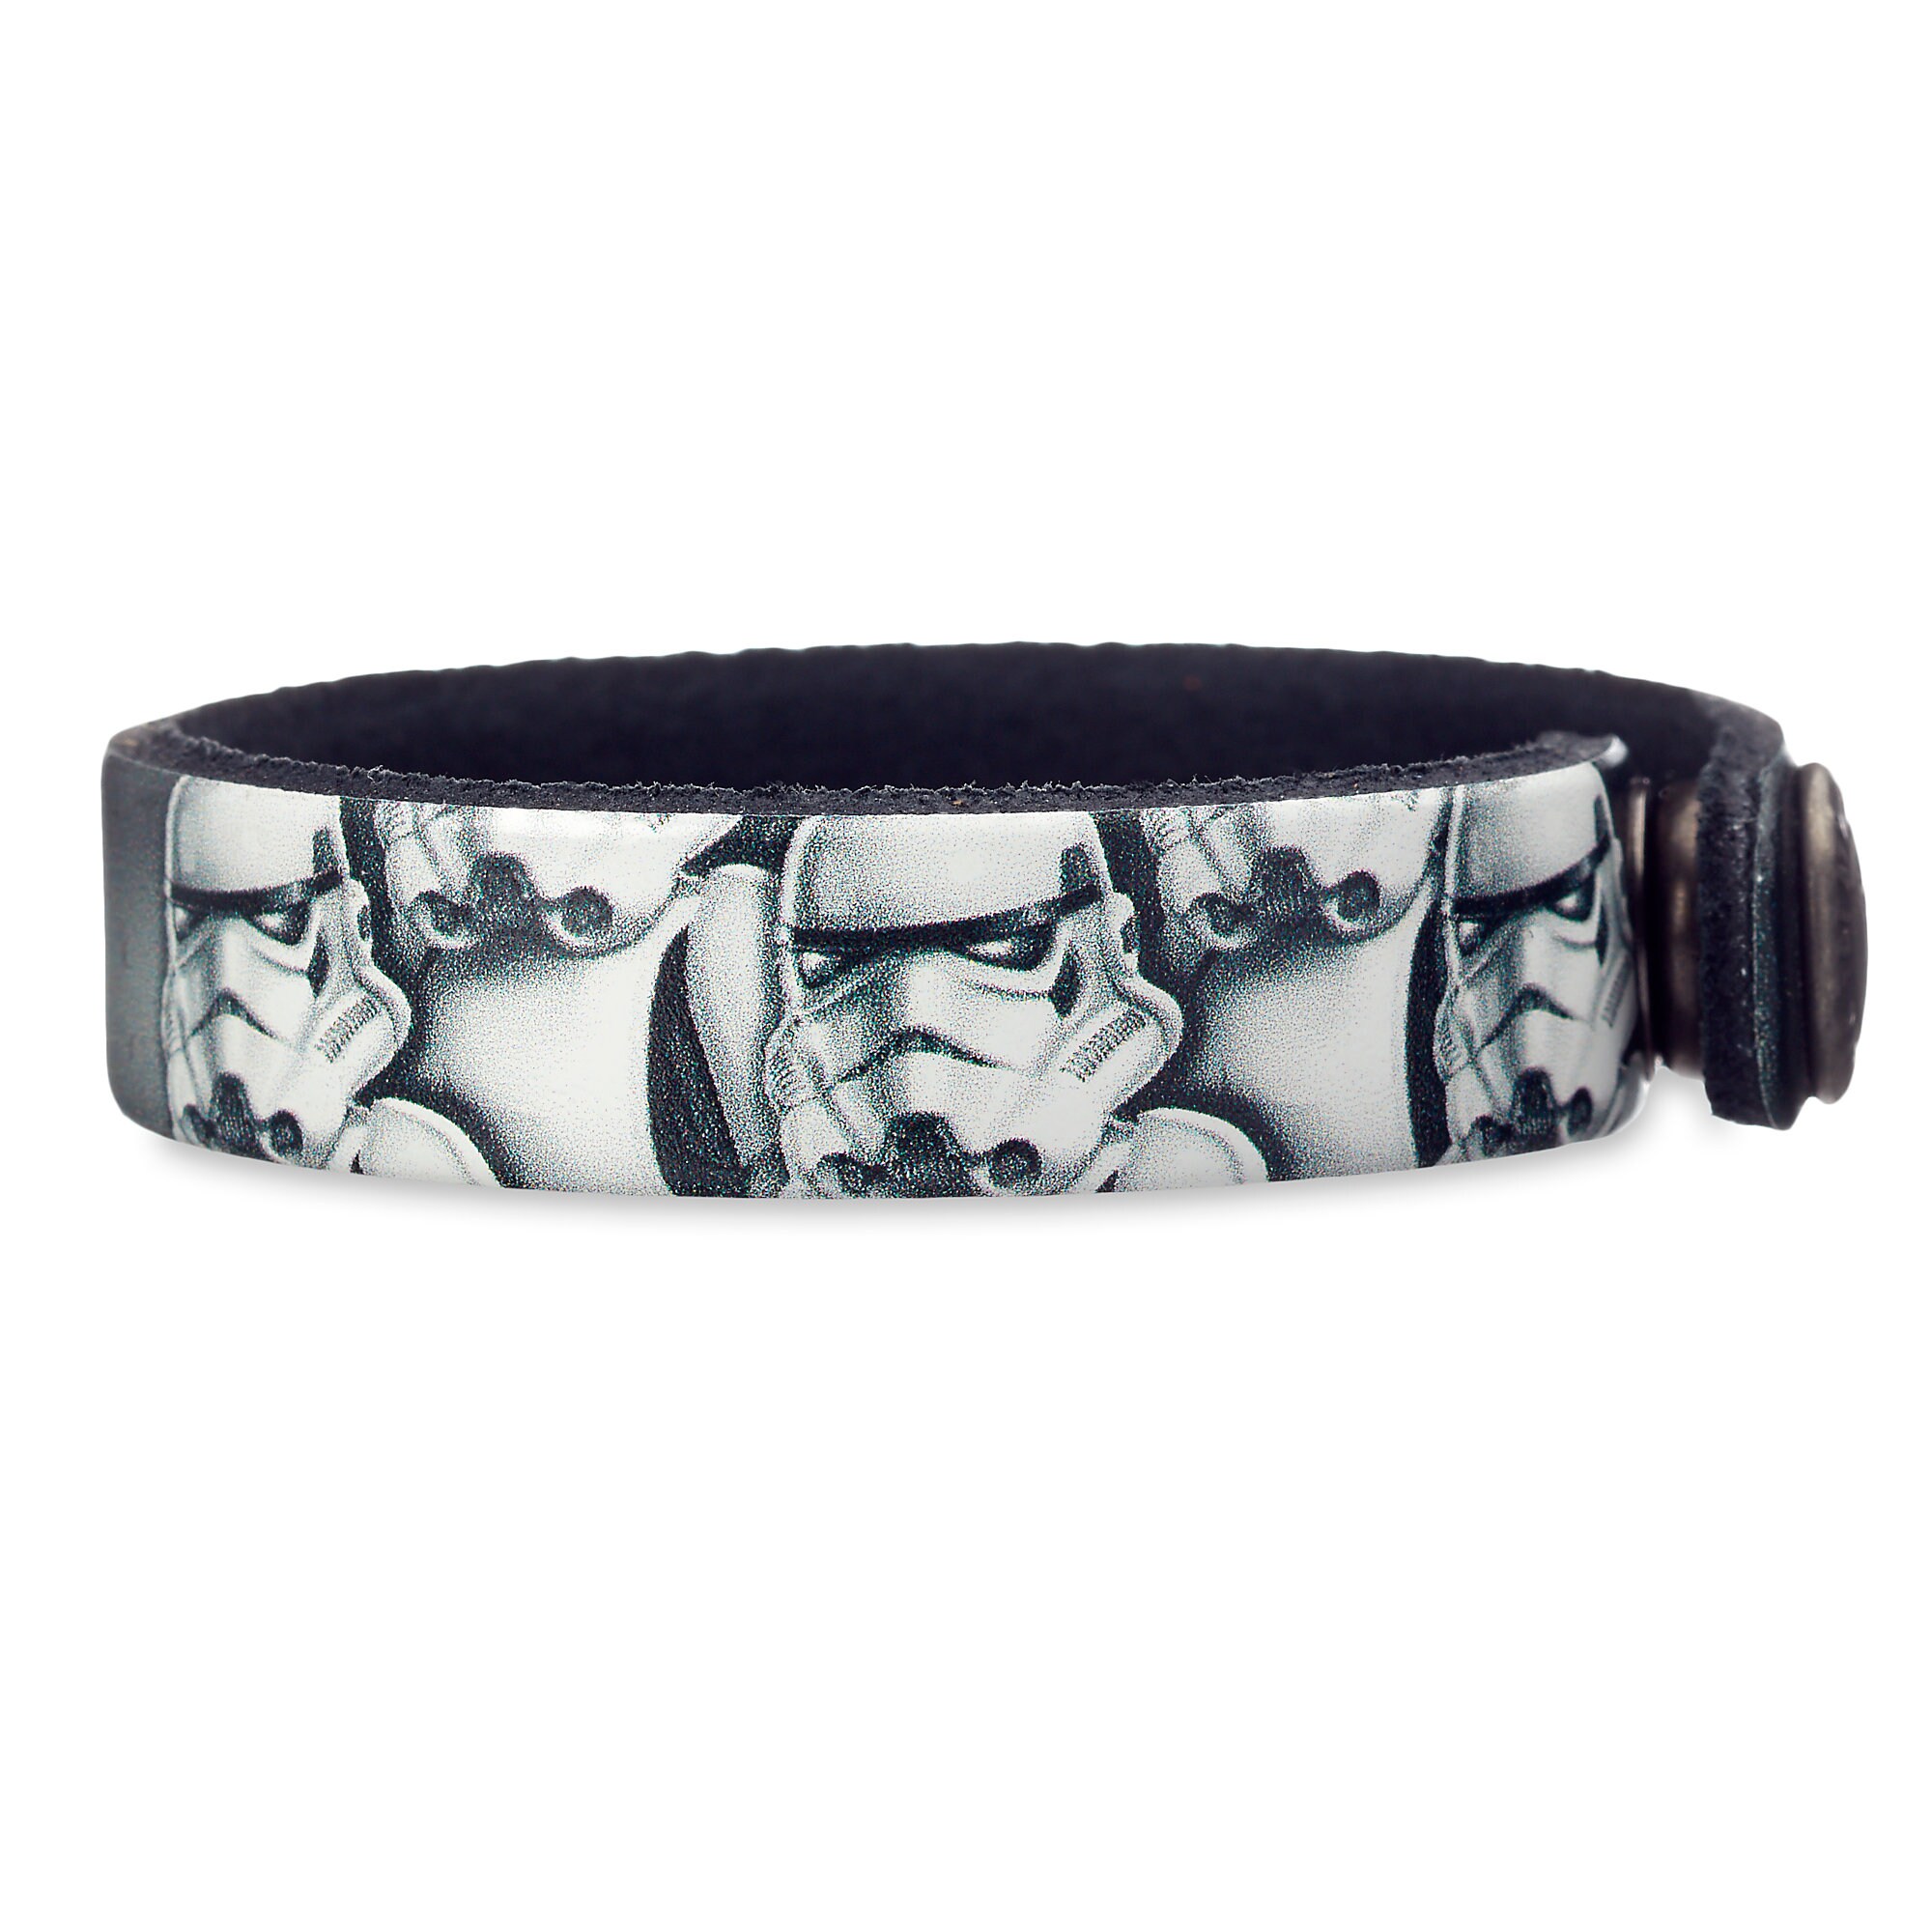 Stormtrooper Leather Bracelet - Star Wars - Personalizable